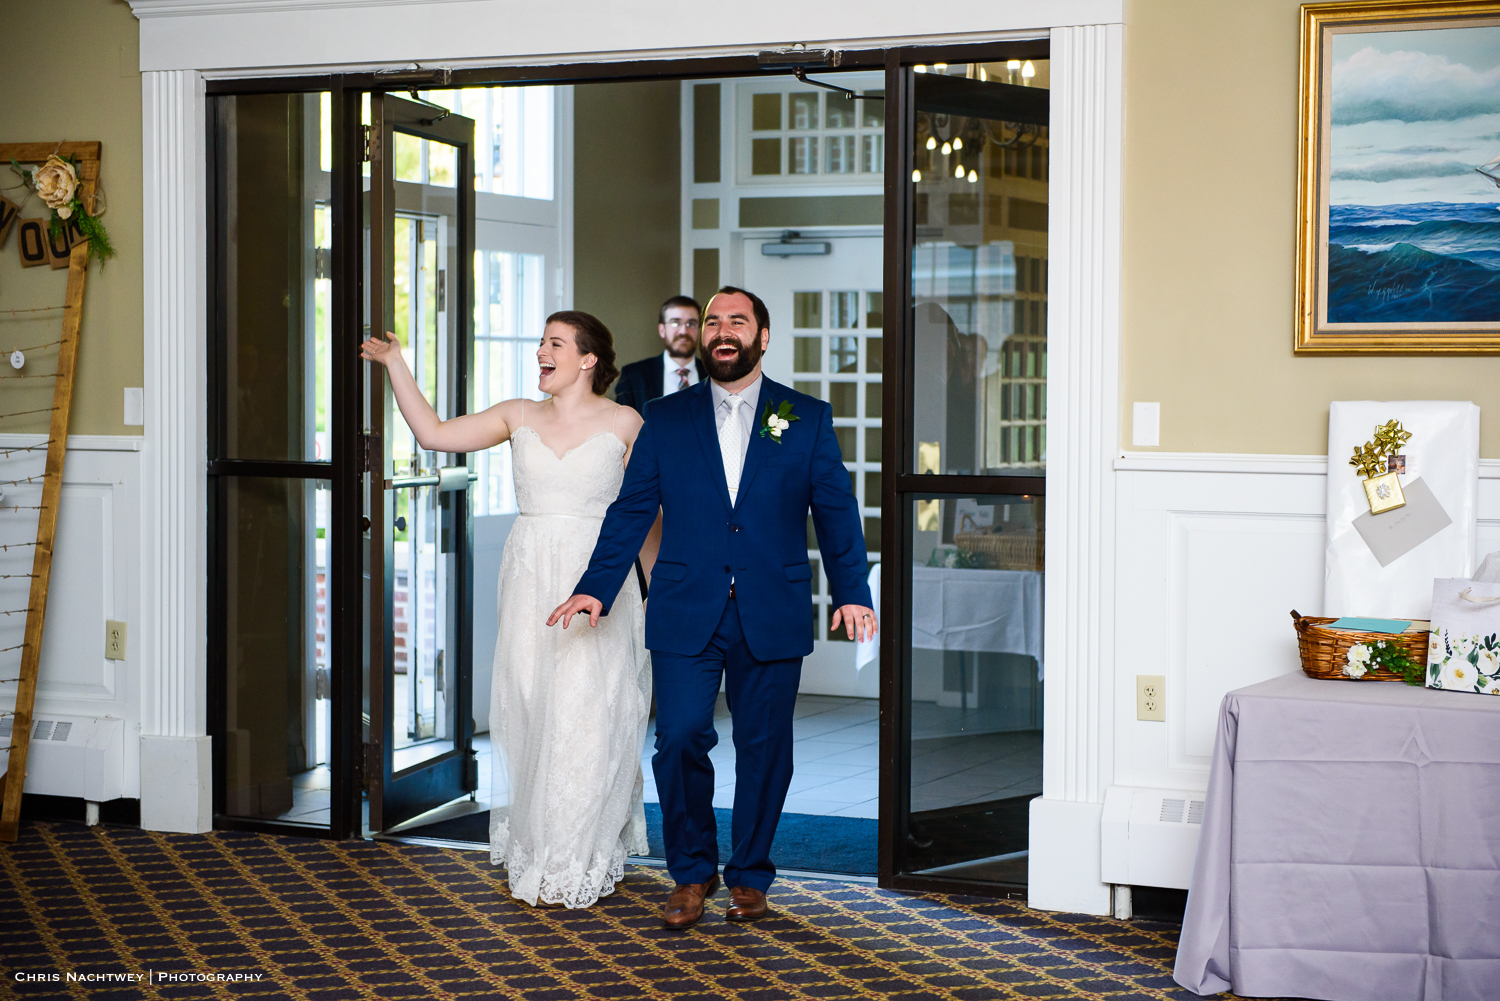 wedding-photos-united-states-coast-guard-academy-chris-nachtwey-photography-2019-24.jpg